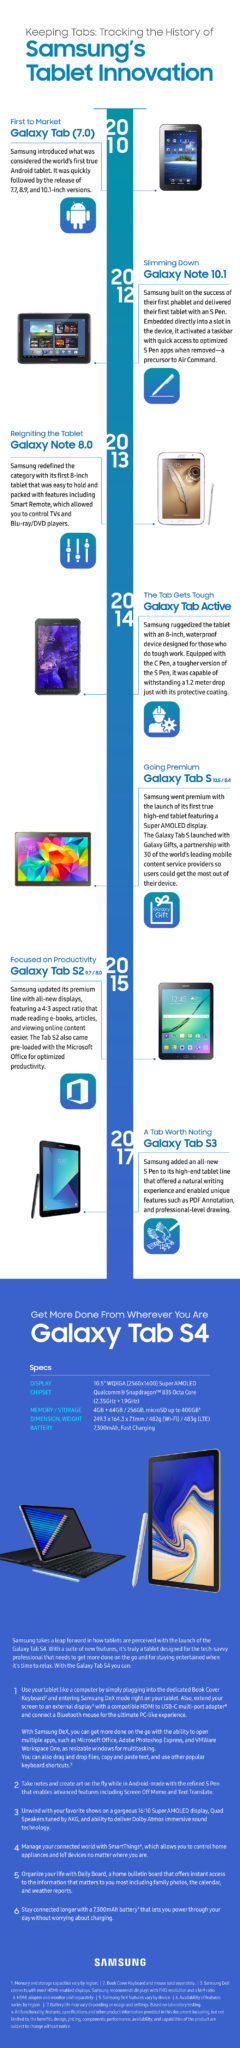 [Infographic] Samsung Mobile Innovation: Setting a New Bar for Tablet Computing